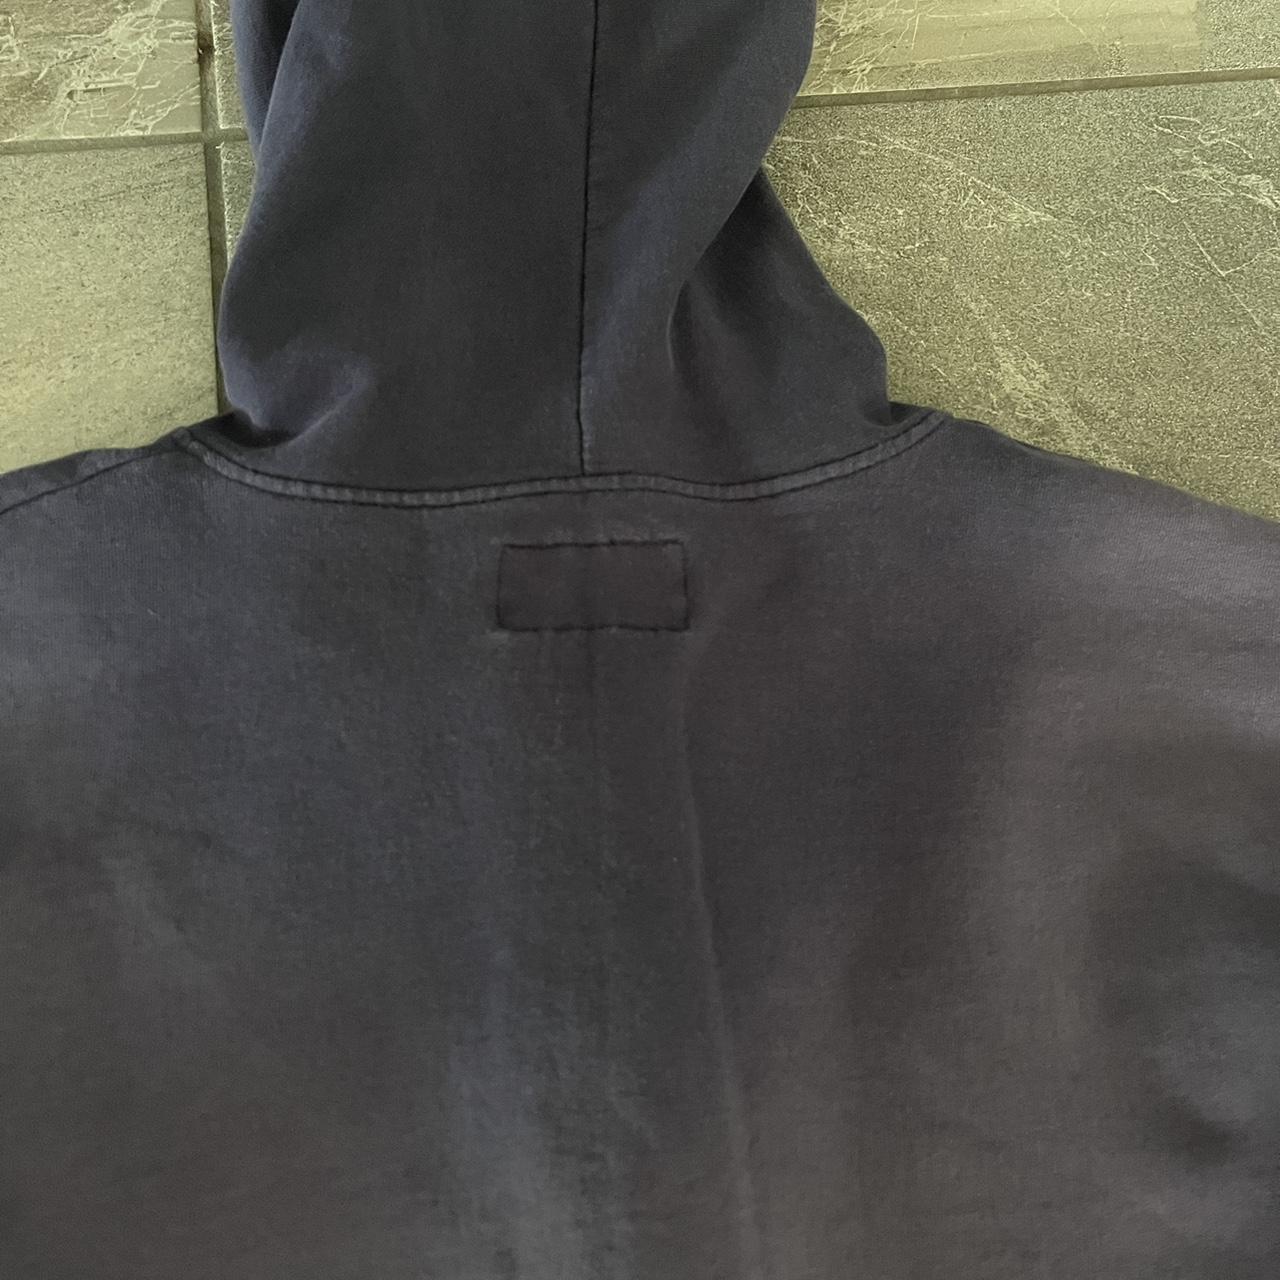 Vintage Starter zip up hoodie. Nice fade and... - Depop